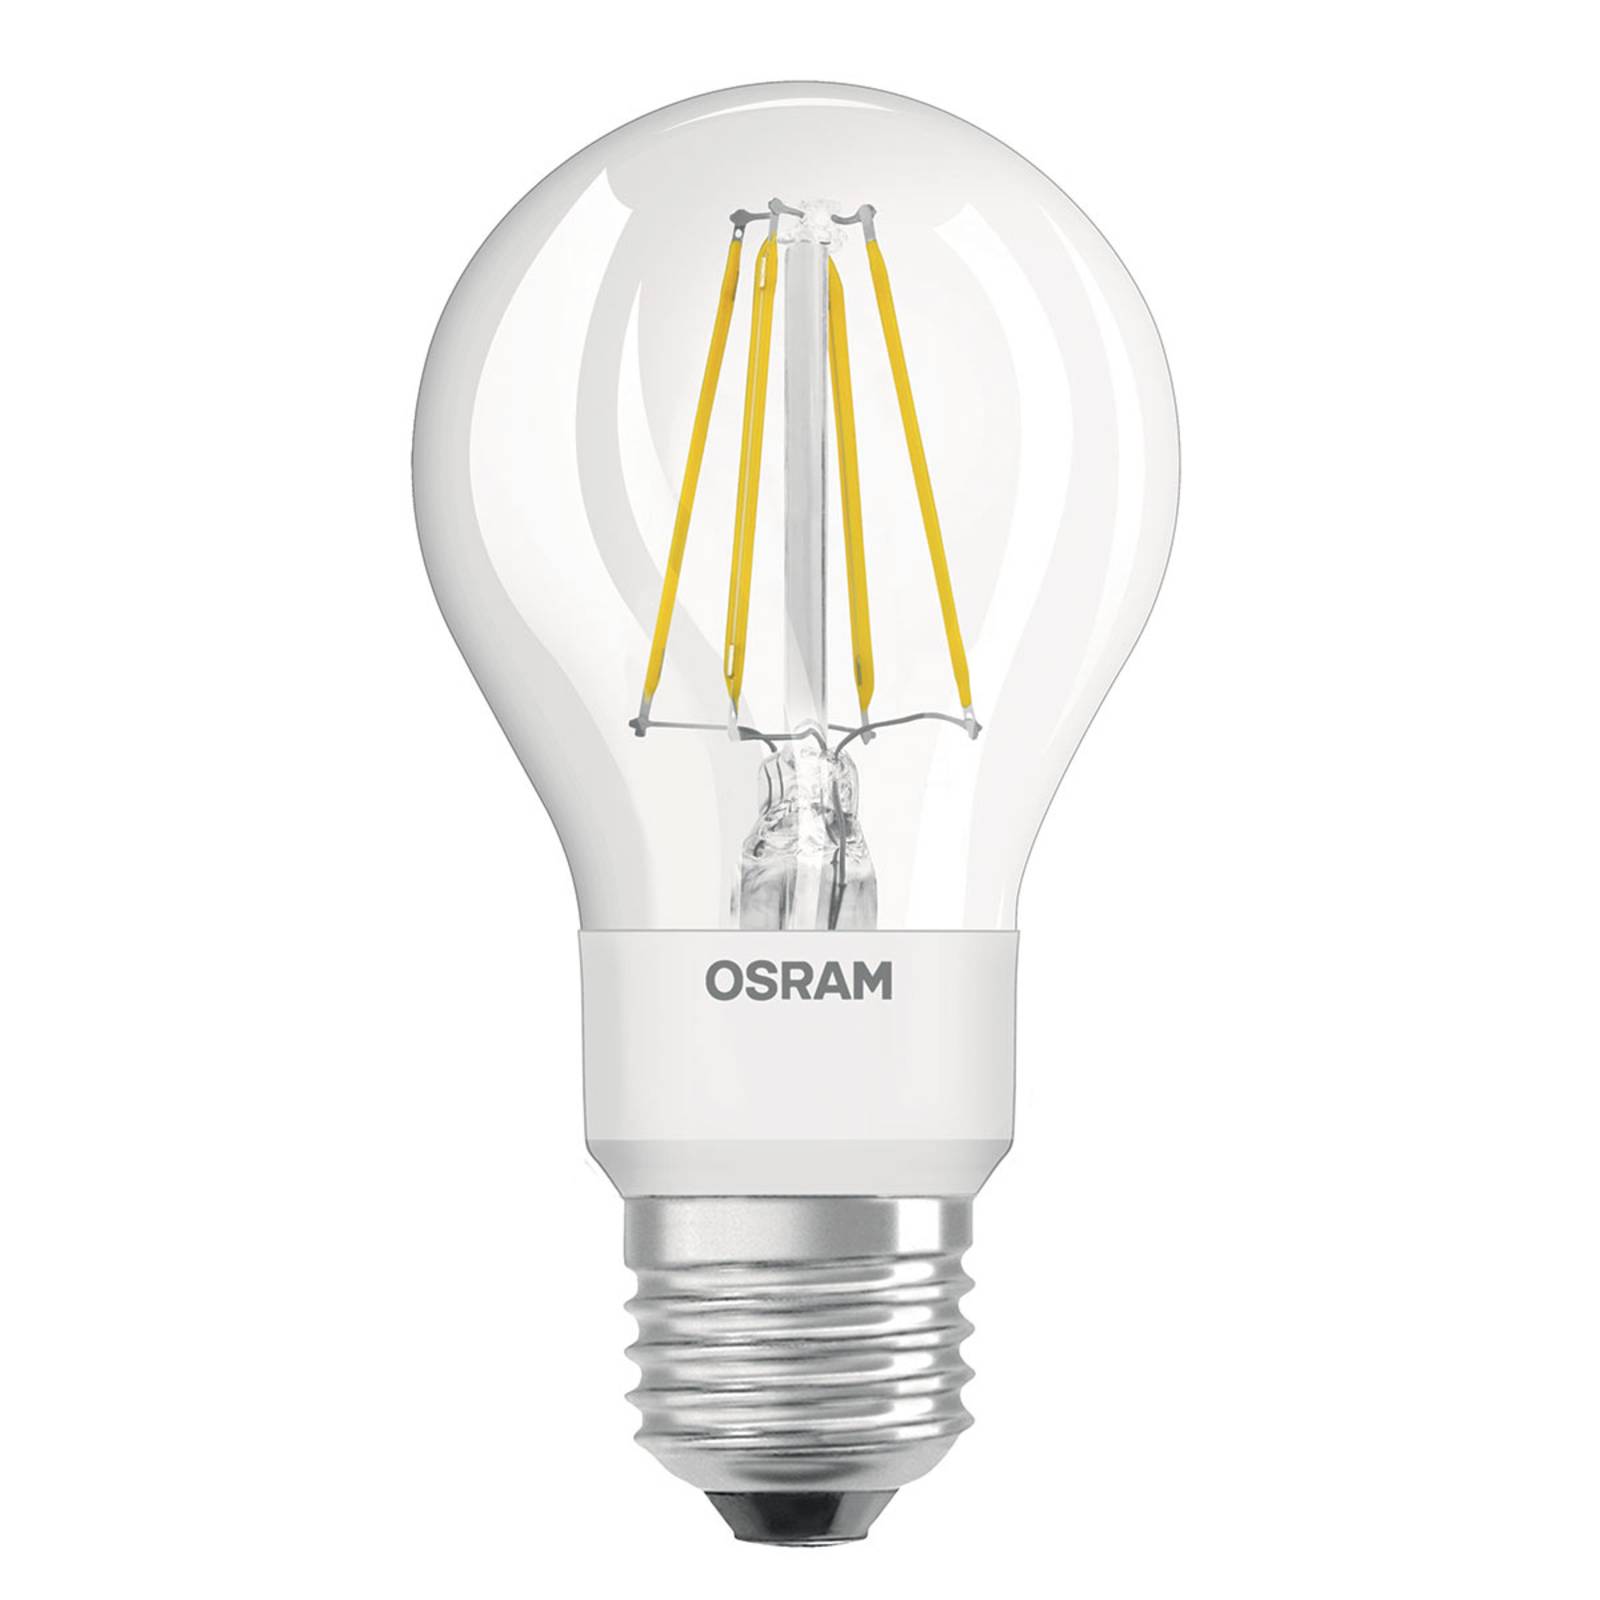 OSRAM OSRAM LED žárovka 4W Star+ GLOWdim filament čirá